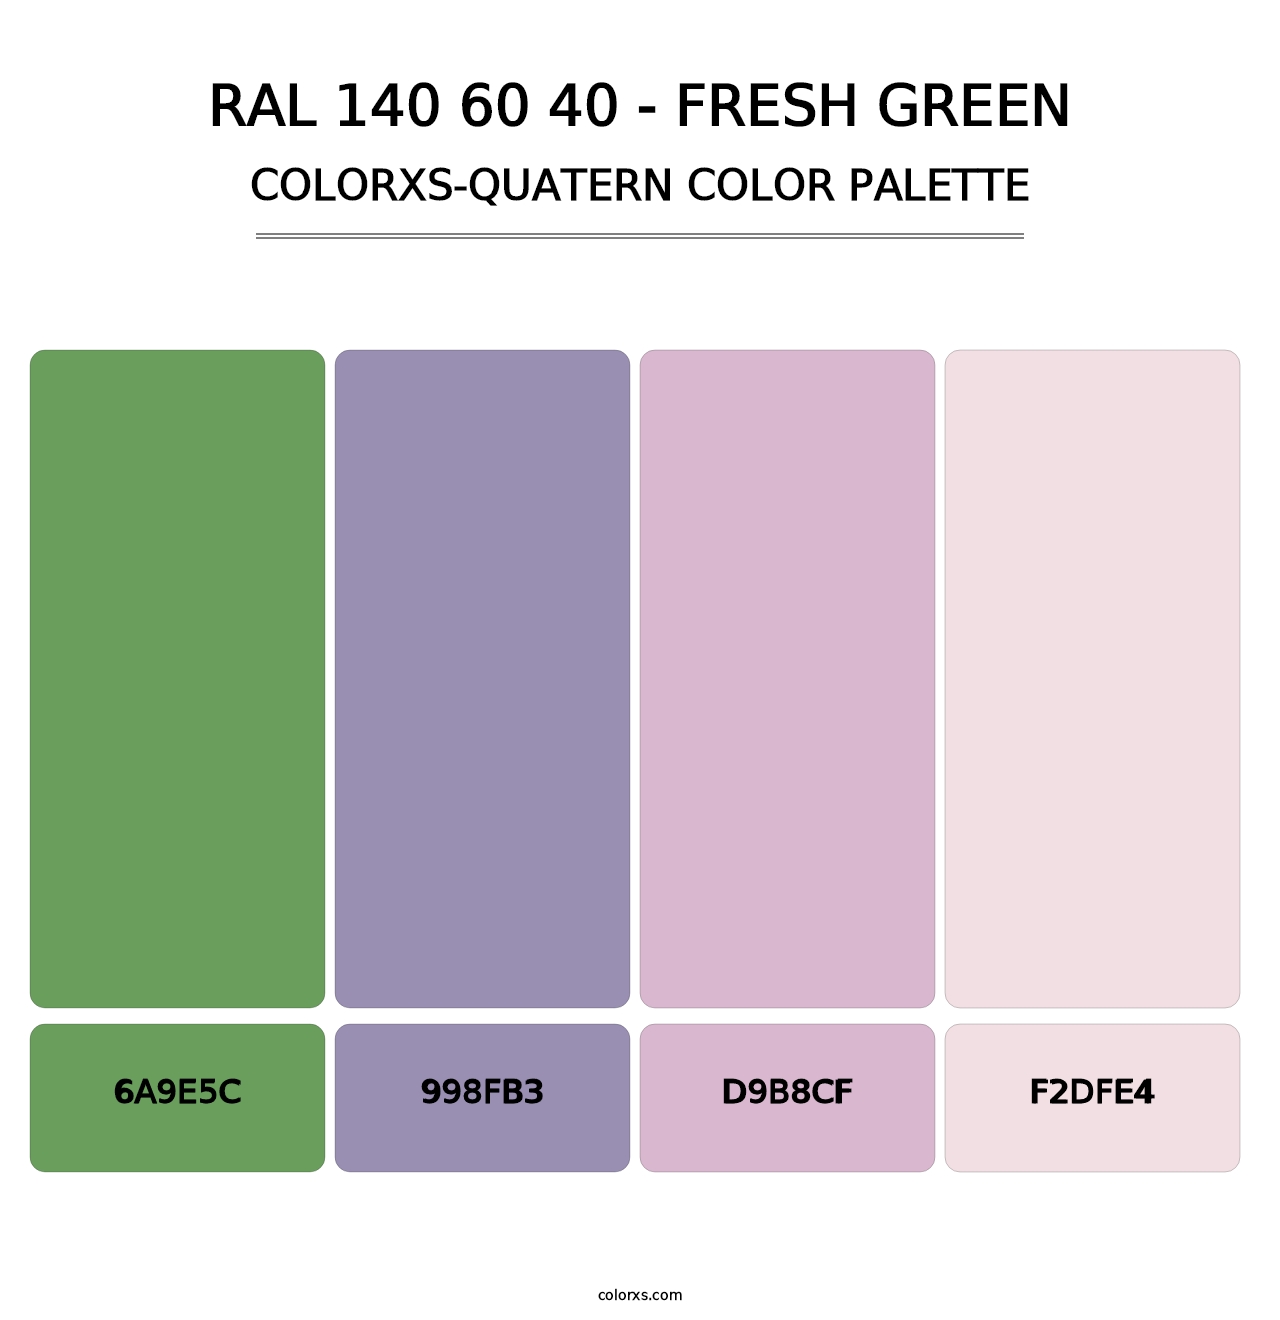 RAL 140 60 40 - Fresh Green - Colorxs Quatern Palette